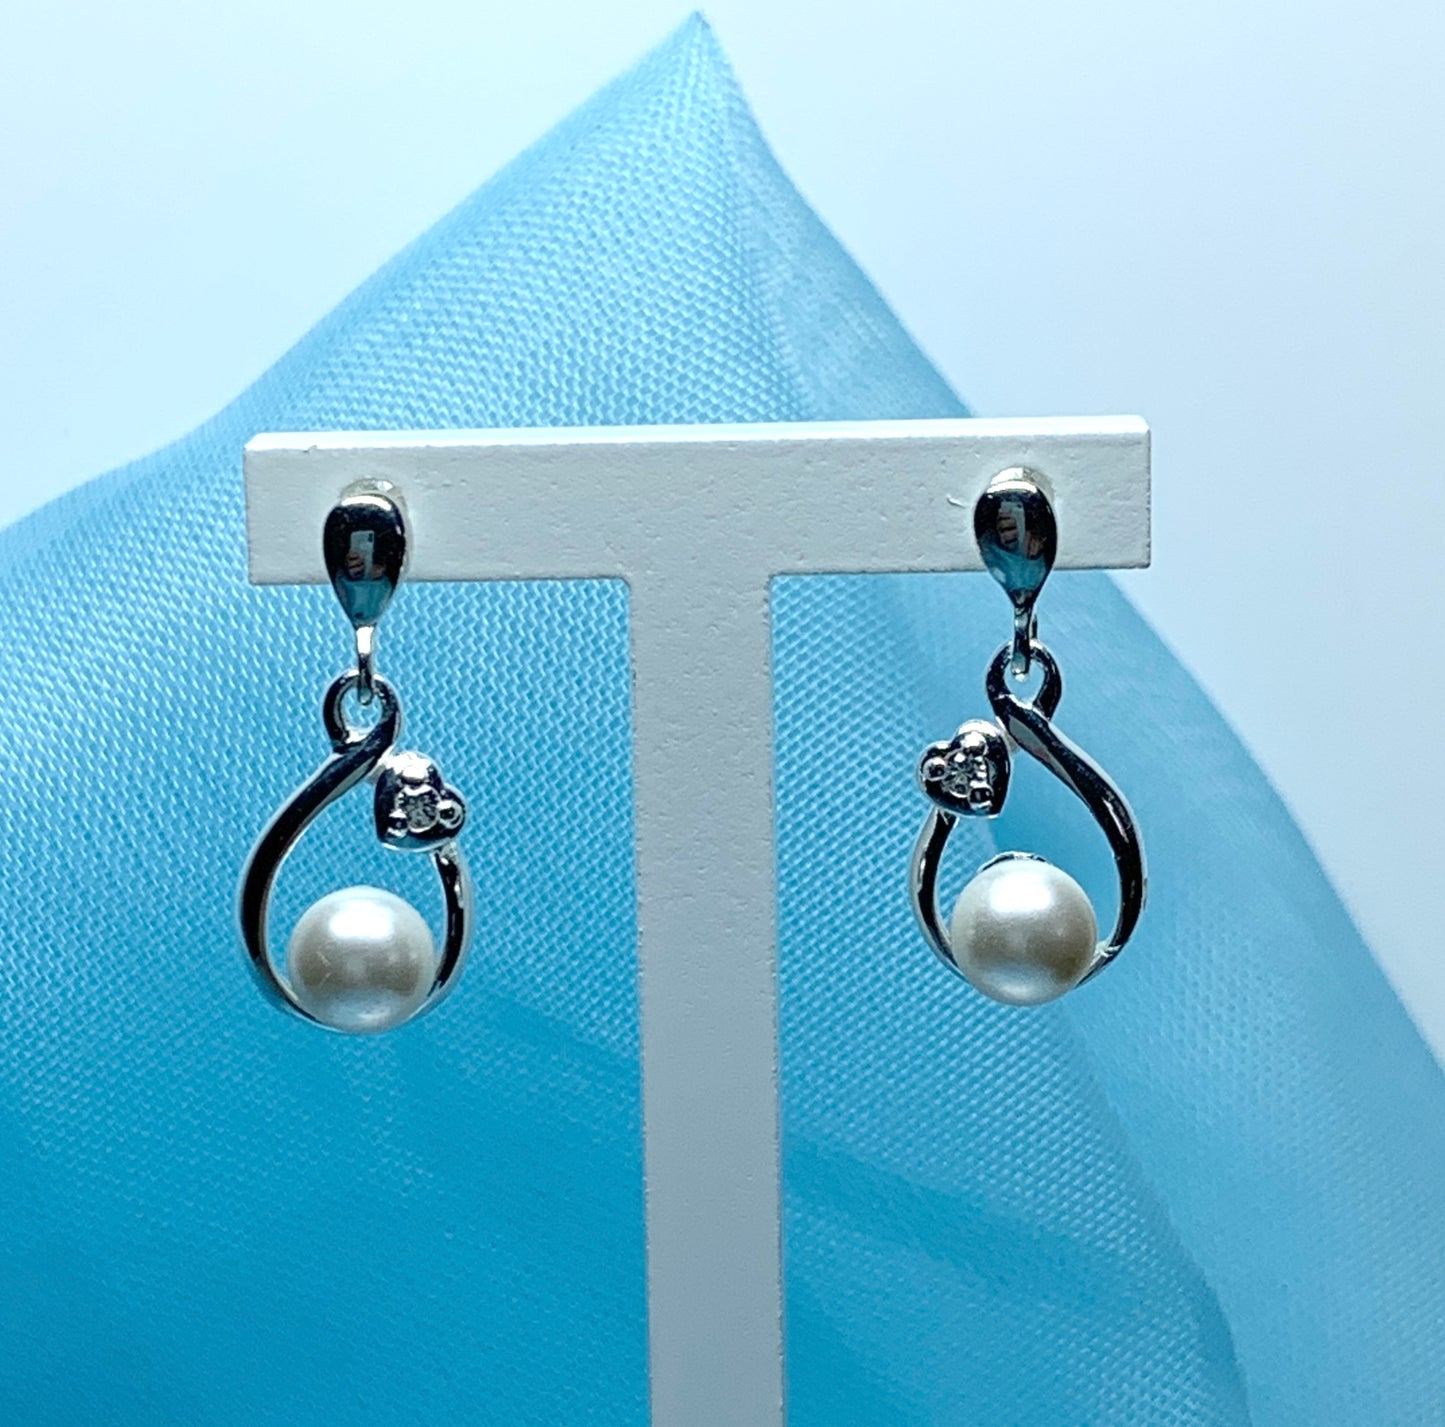 Real freshwater pearl sparkling drop earrings